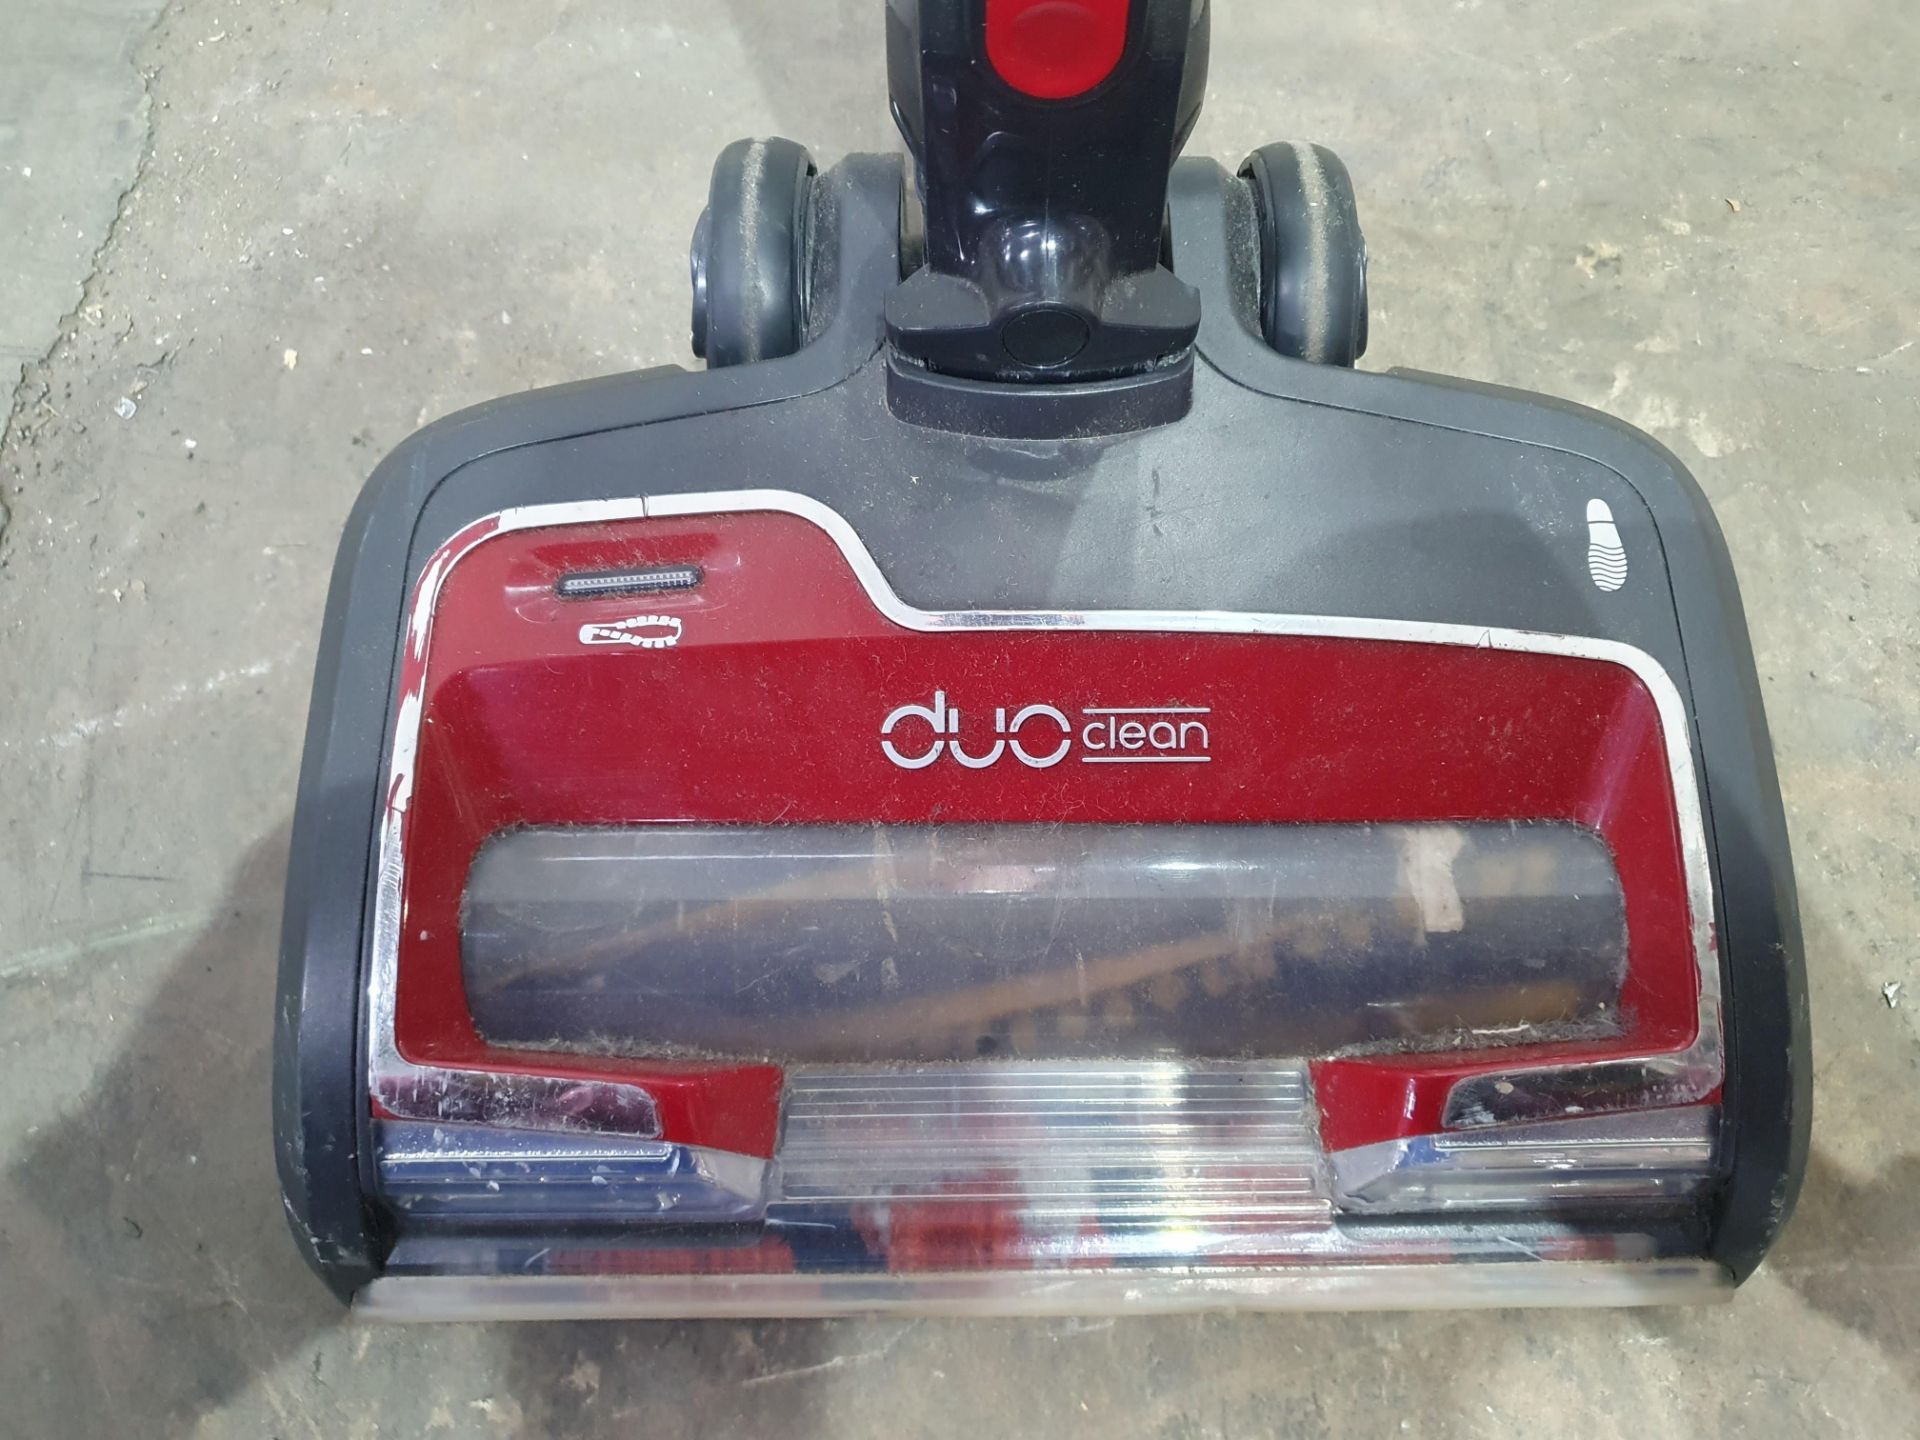 Shark Duo Clean Vacuum Cleaner - Image 7 of 13